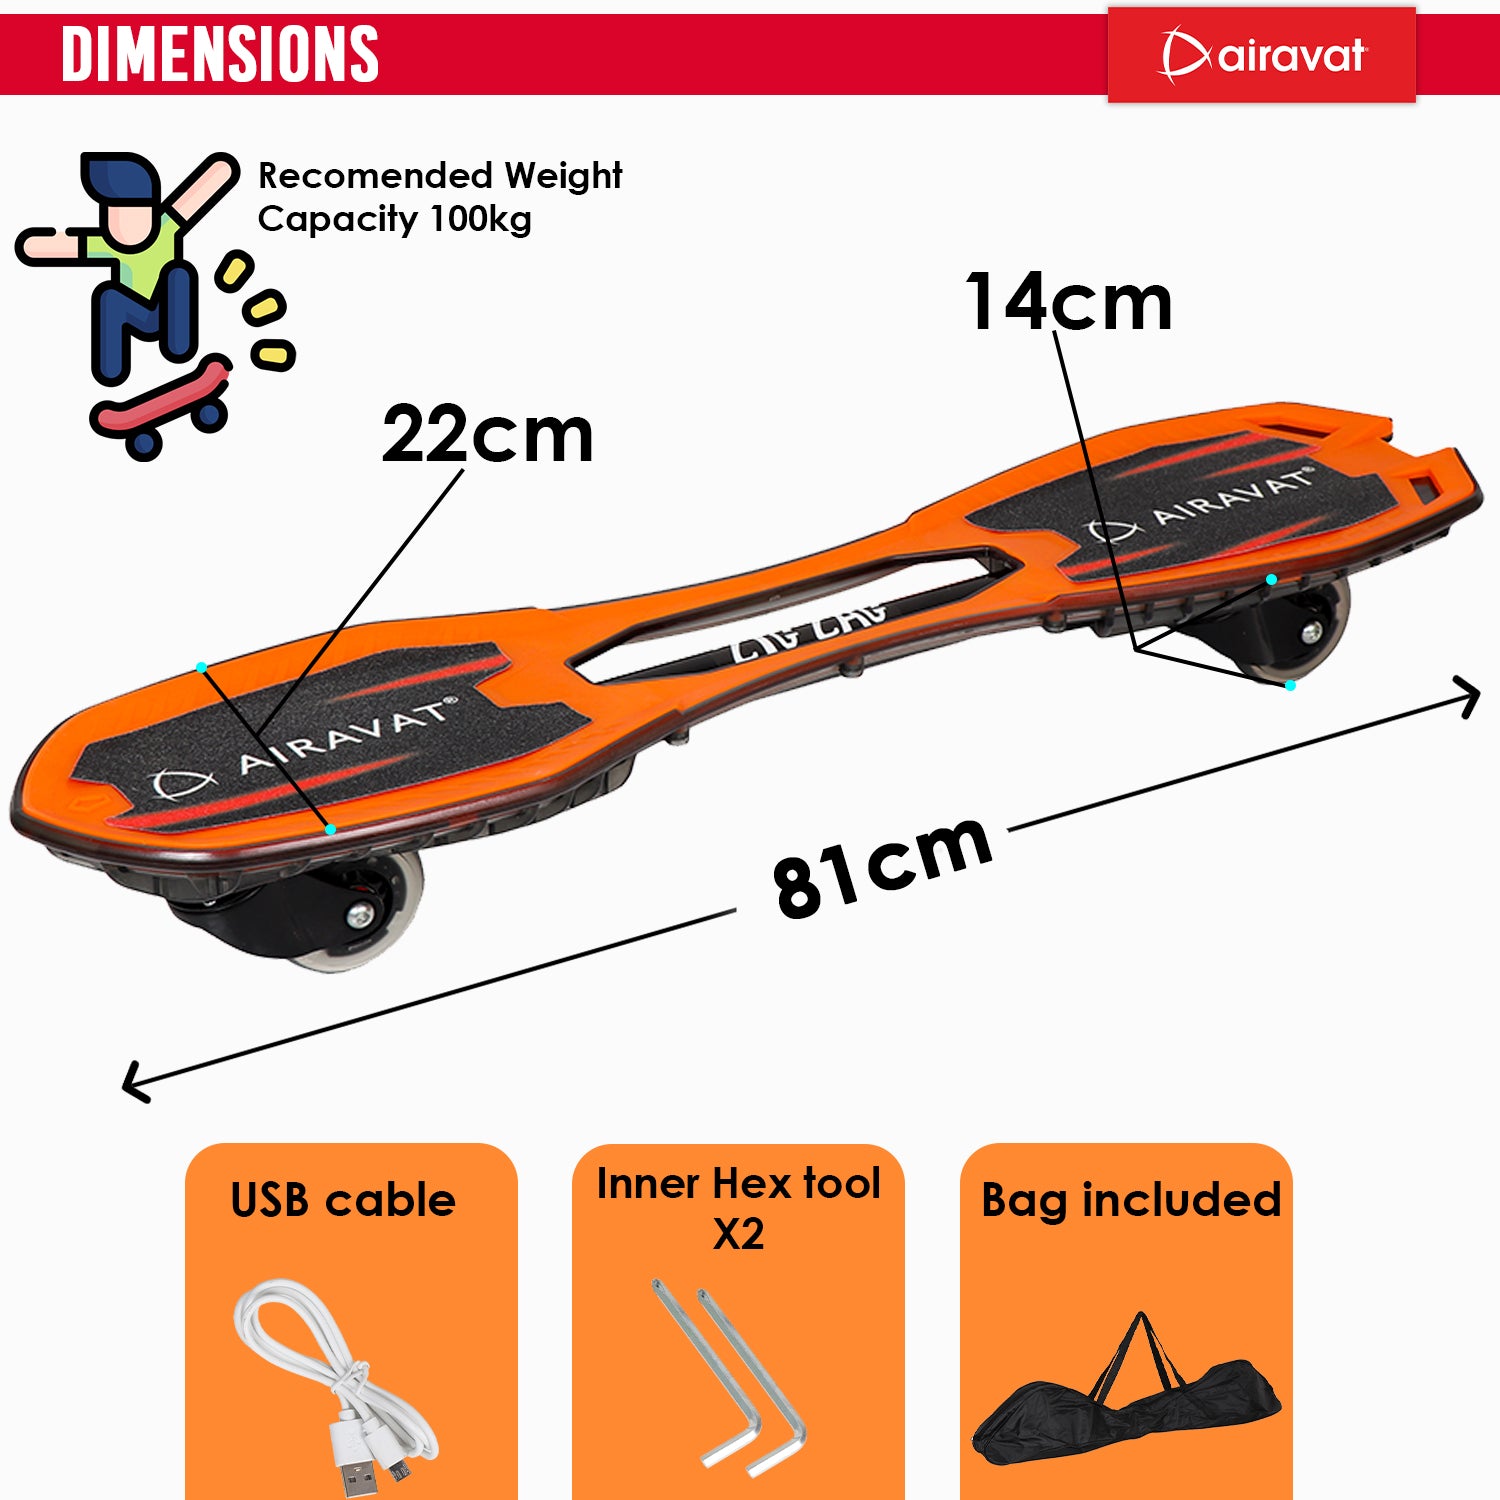 dimensions of zig zag waveboard orange